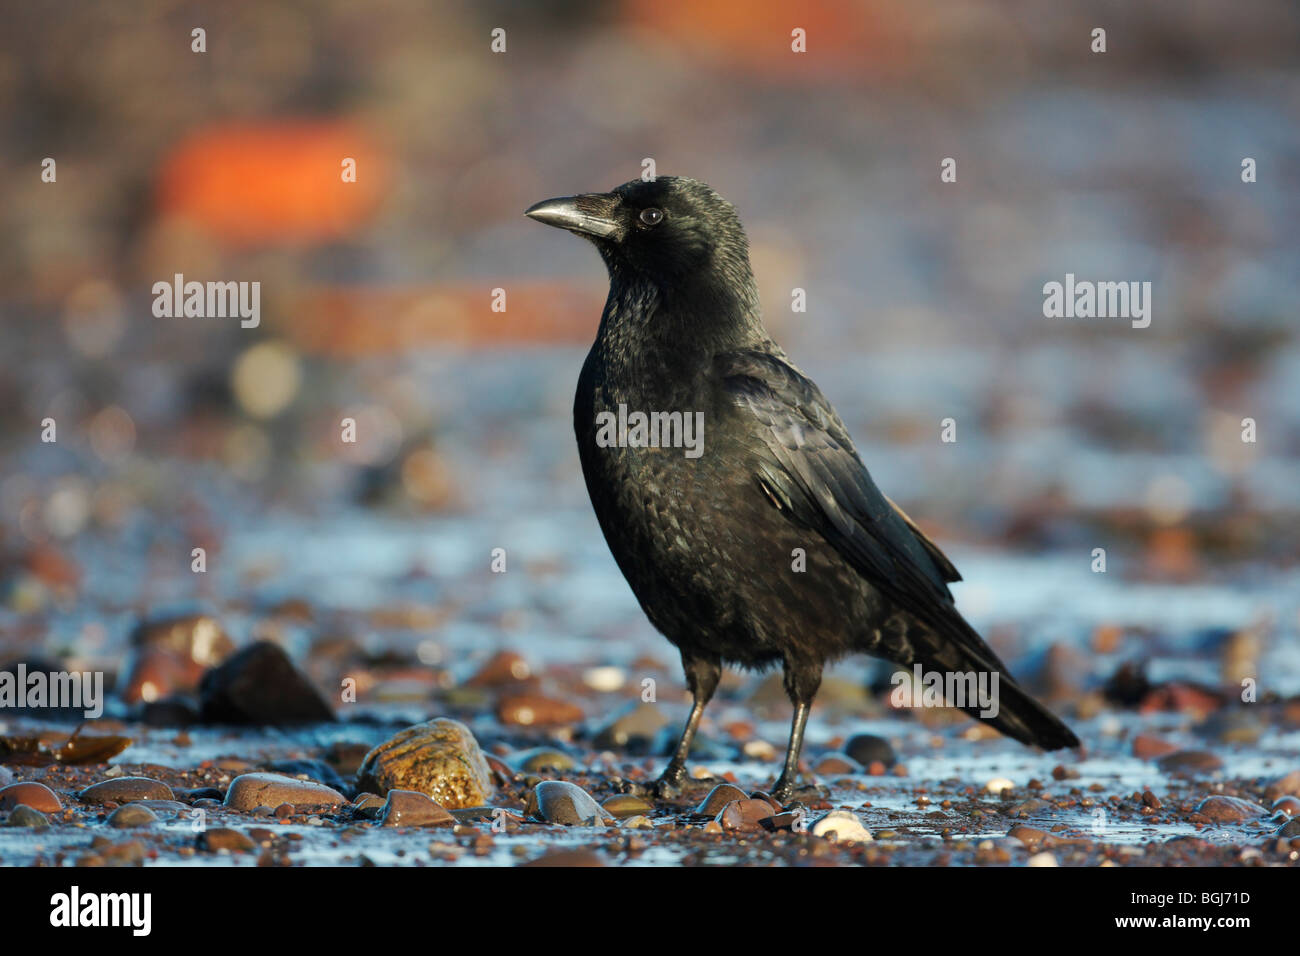 Corneille noire, Corvus corone, seul oiseau standing by water, Galloway, Ecosse, hiver 2009 Banque D'Images